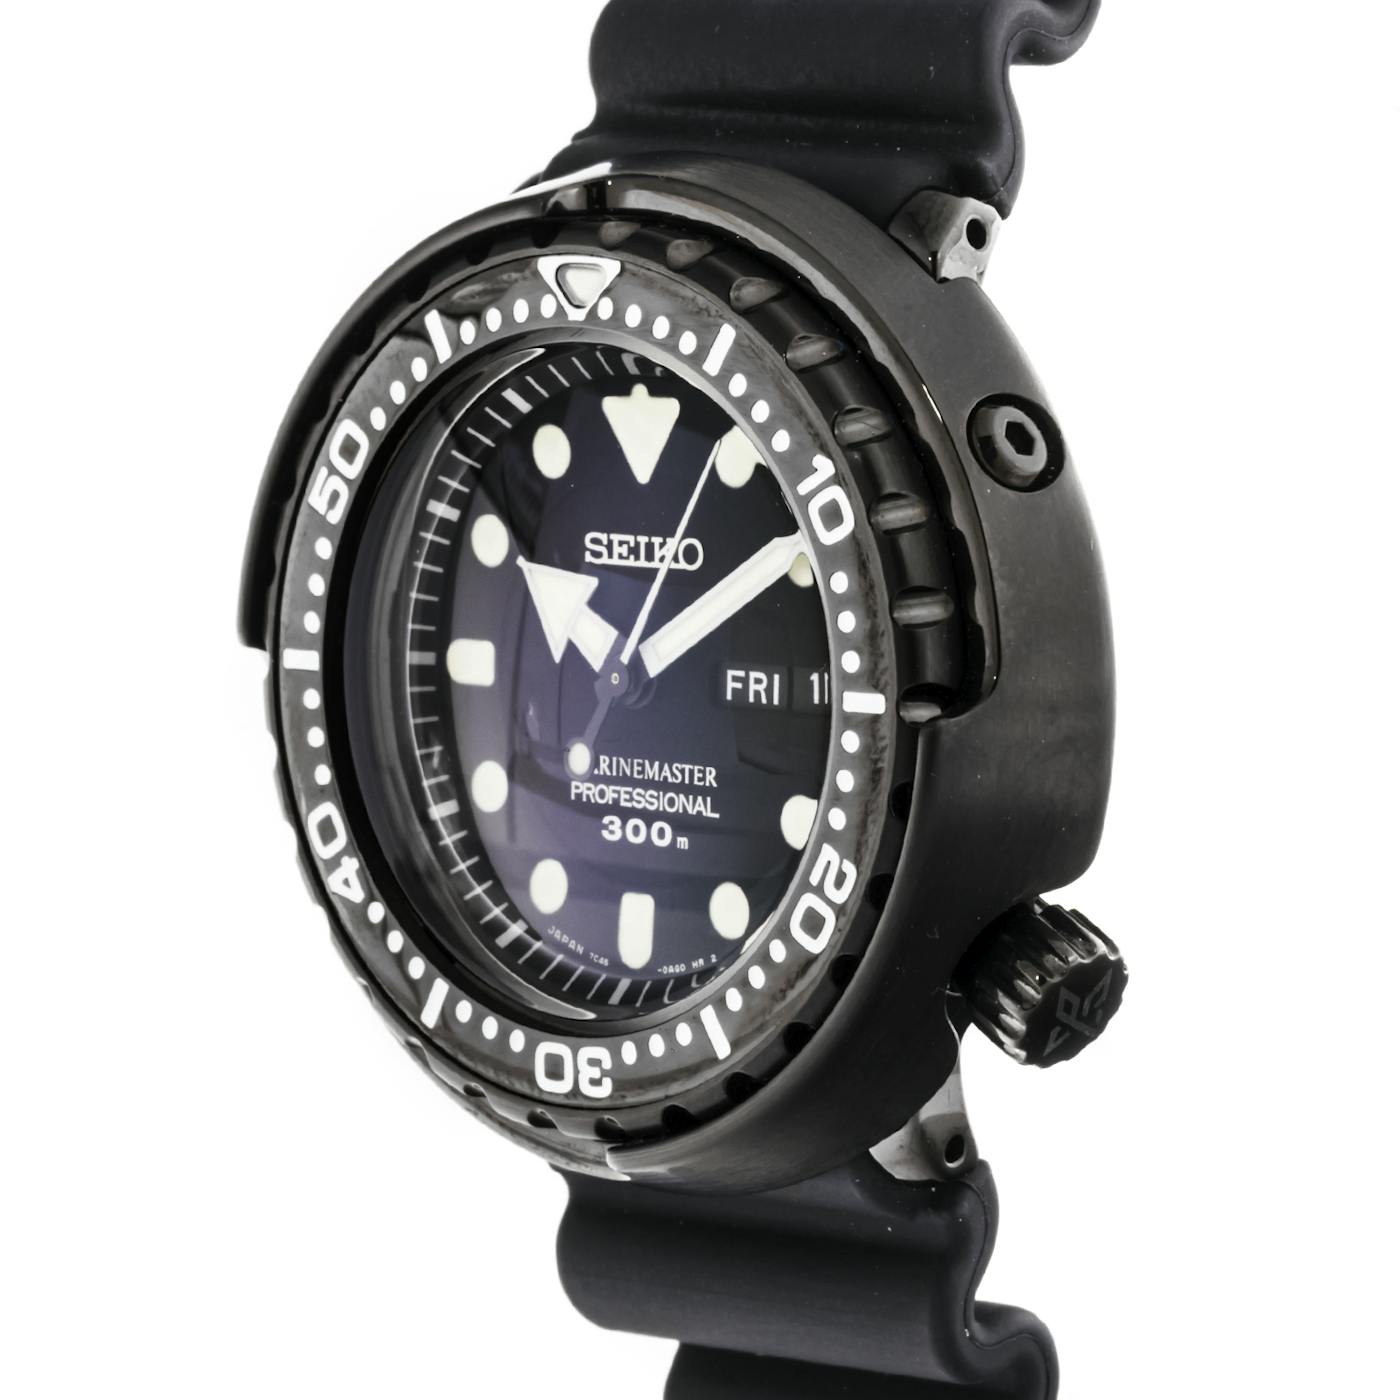 Seiko Prospex Marine Master Professional SBBN035 | WatchBox